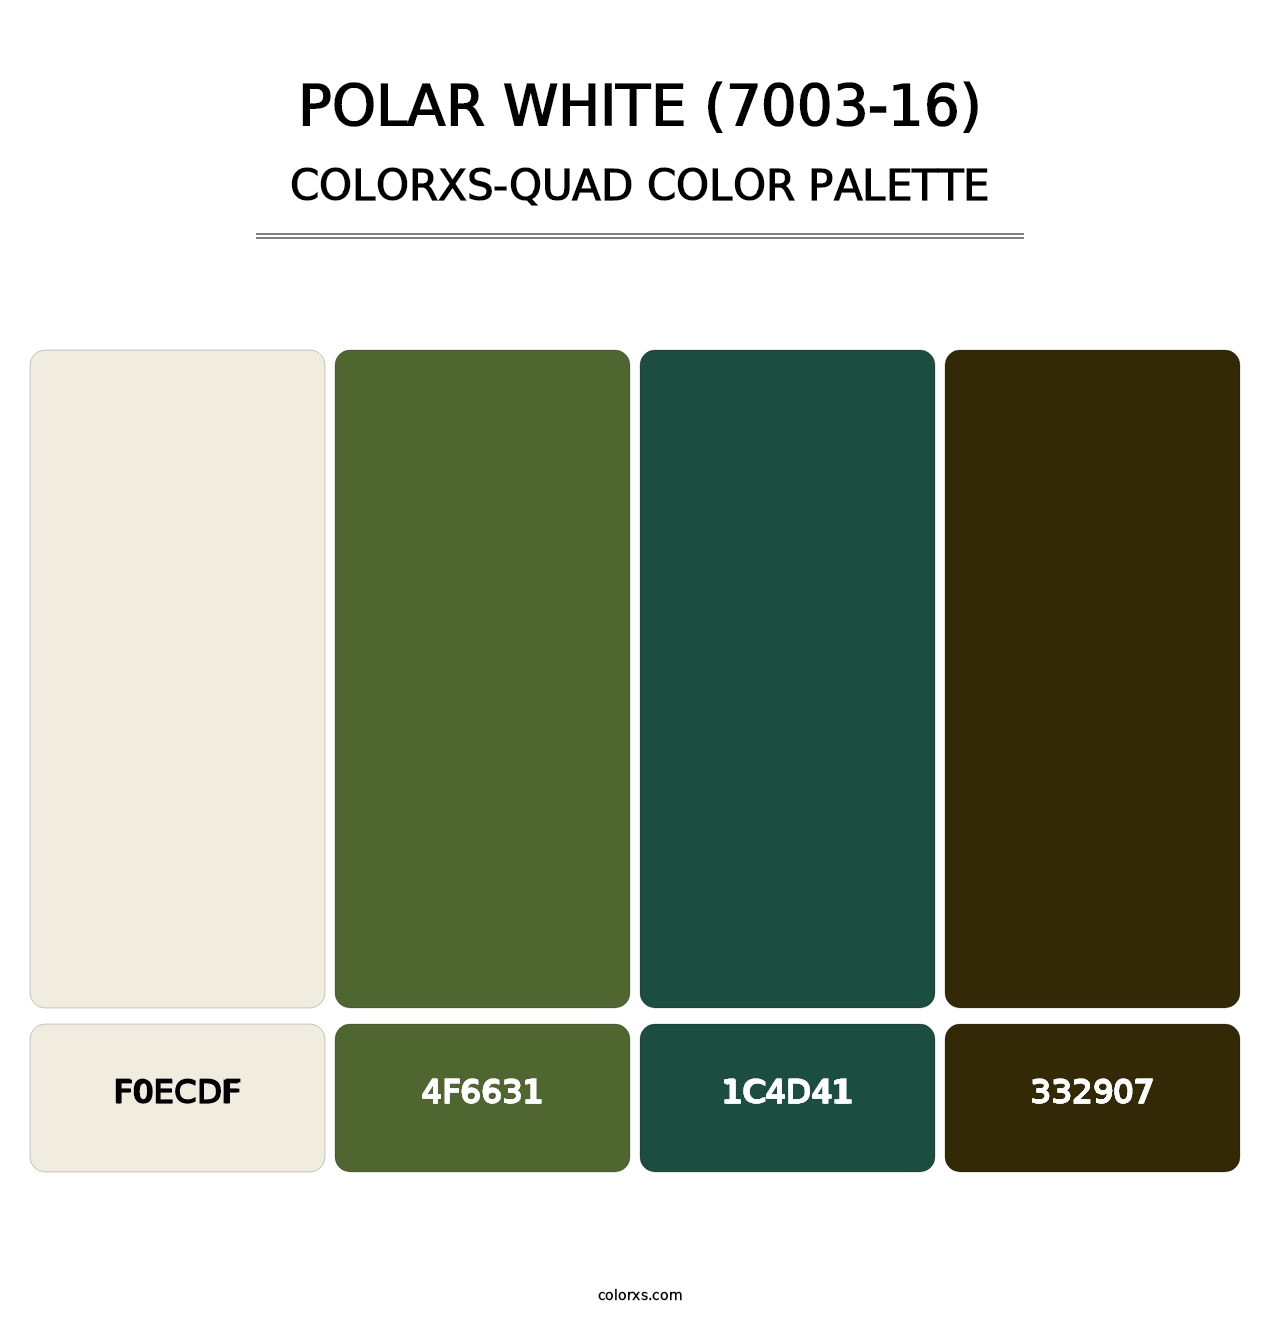 Polar White (7003-16) - Colorxs Quad Palette